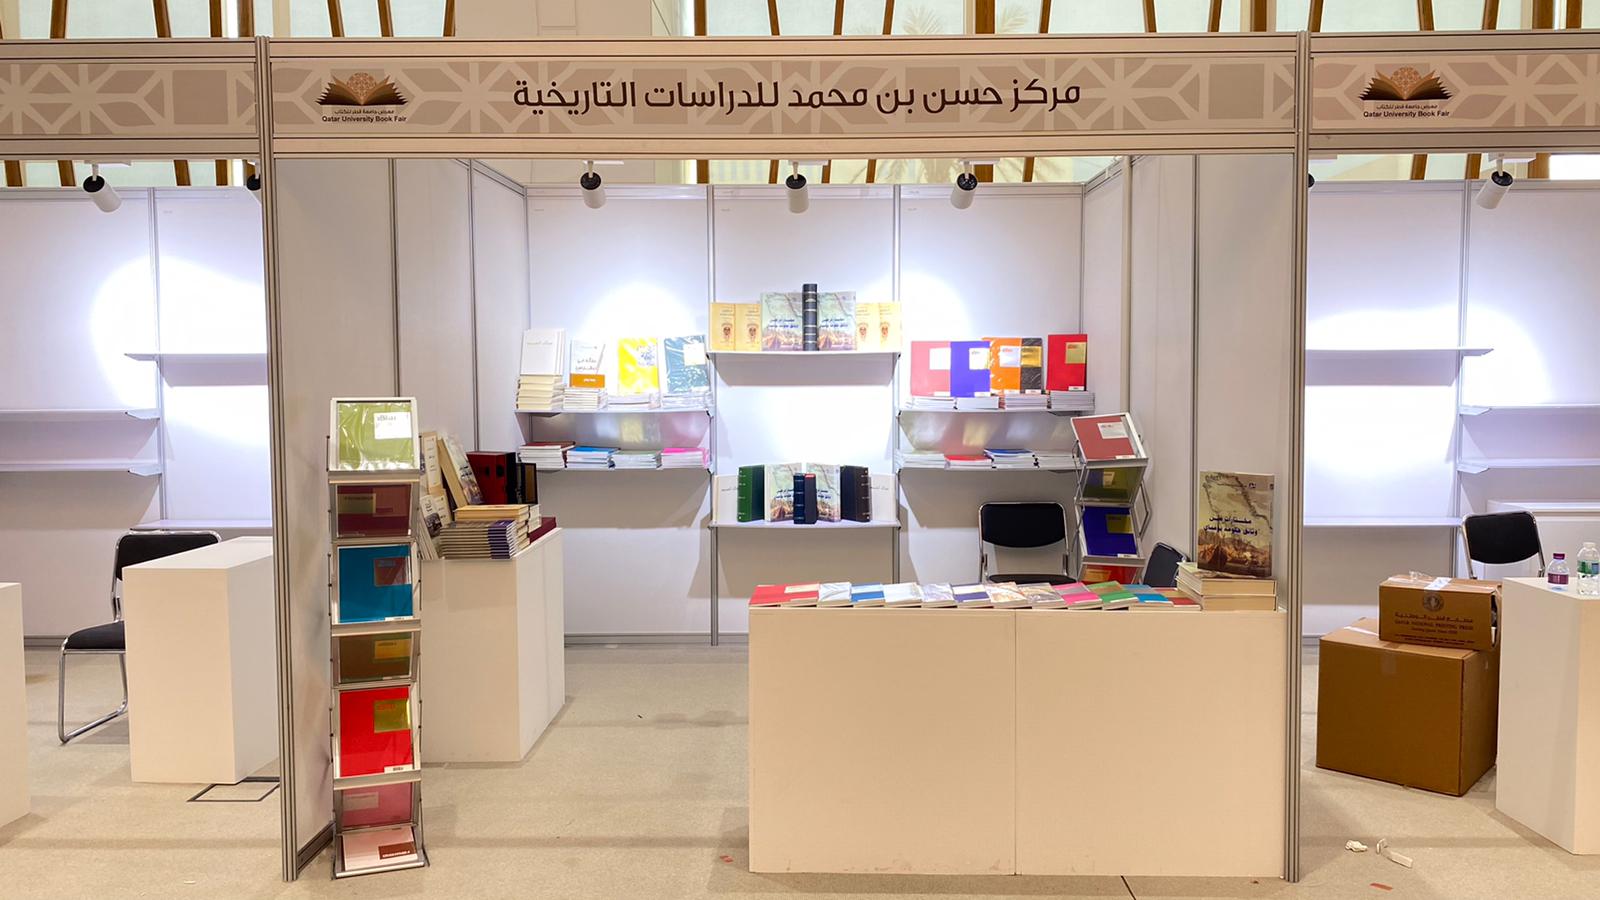 The center participates in the Qatar University Book Fair